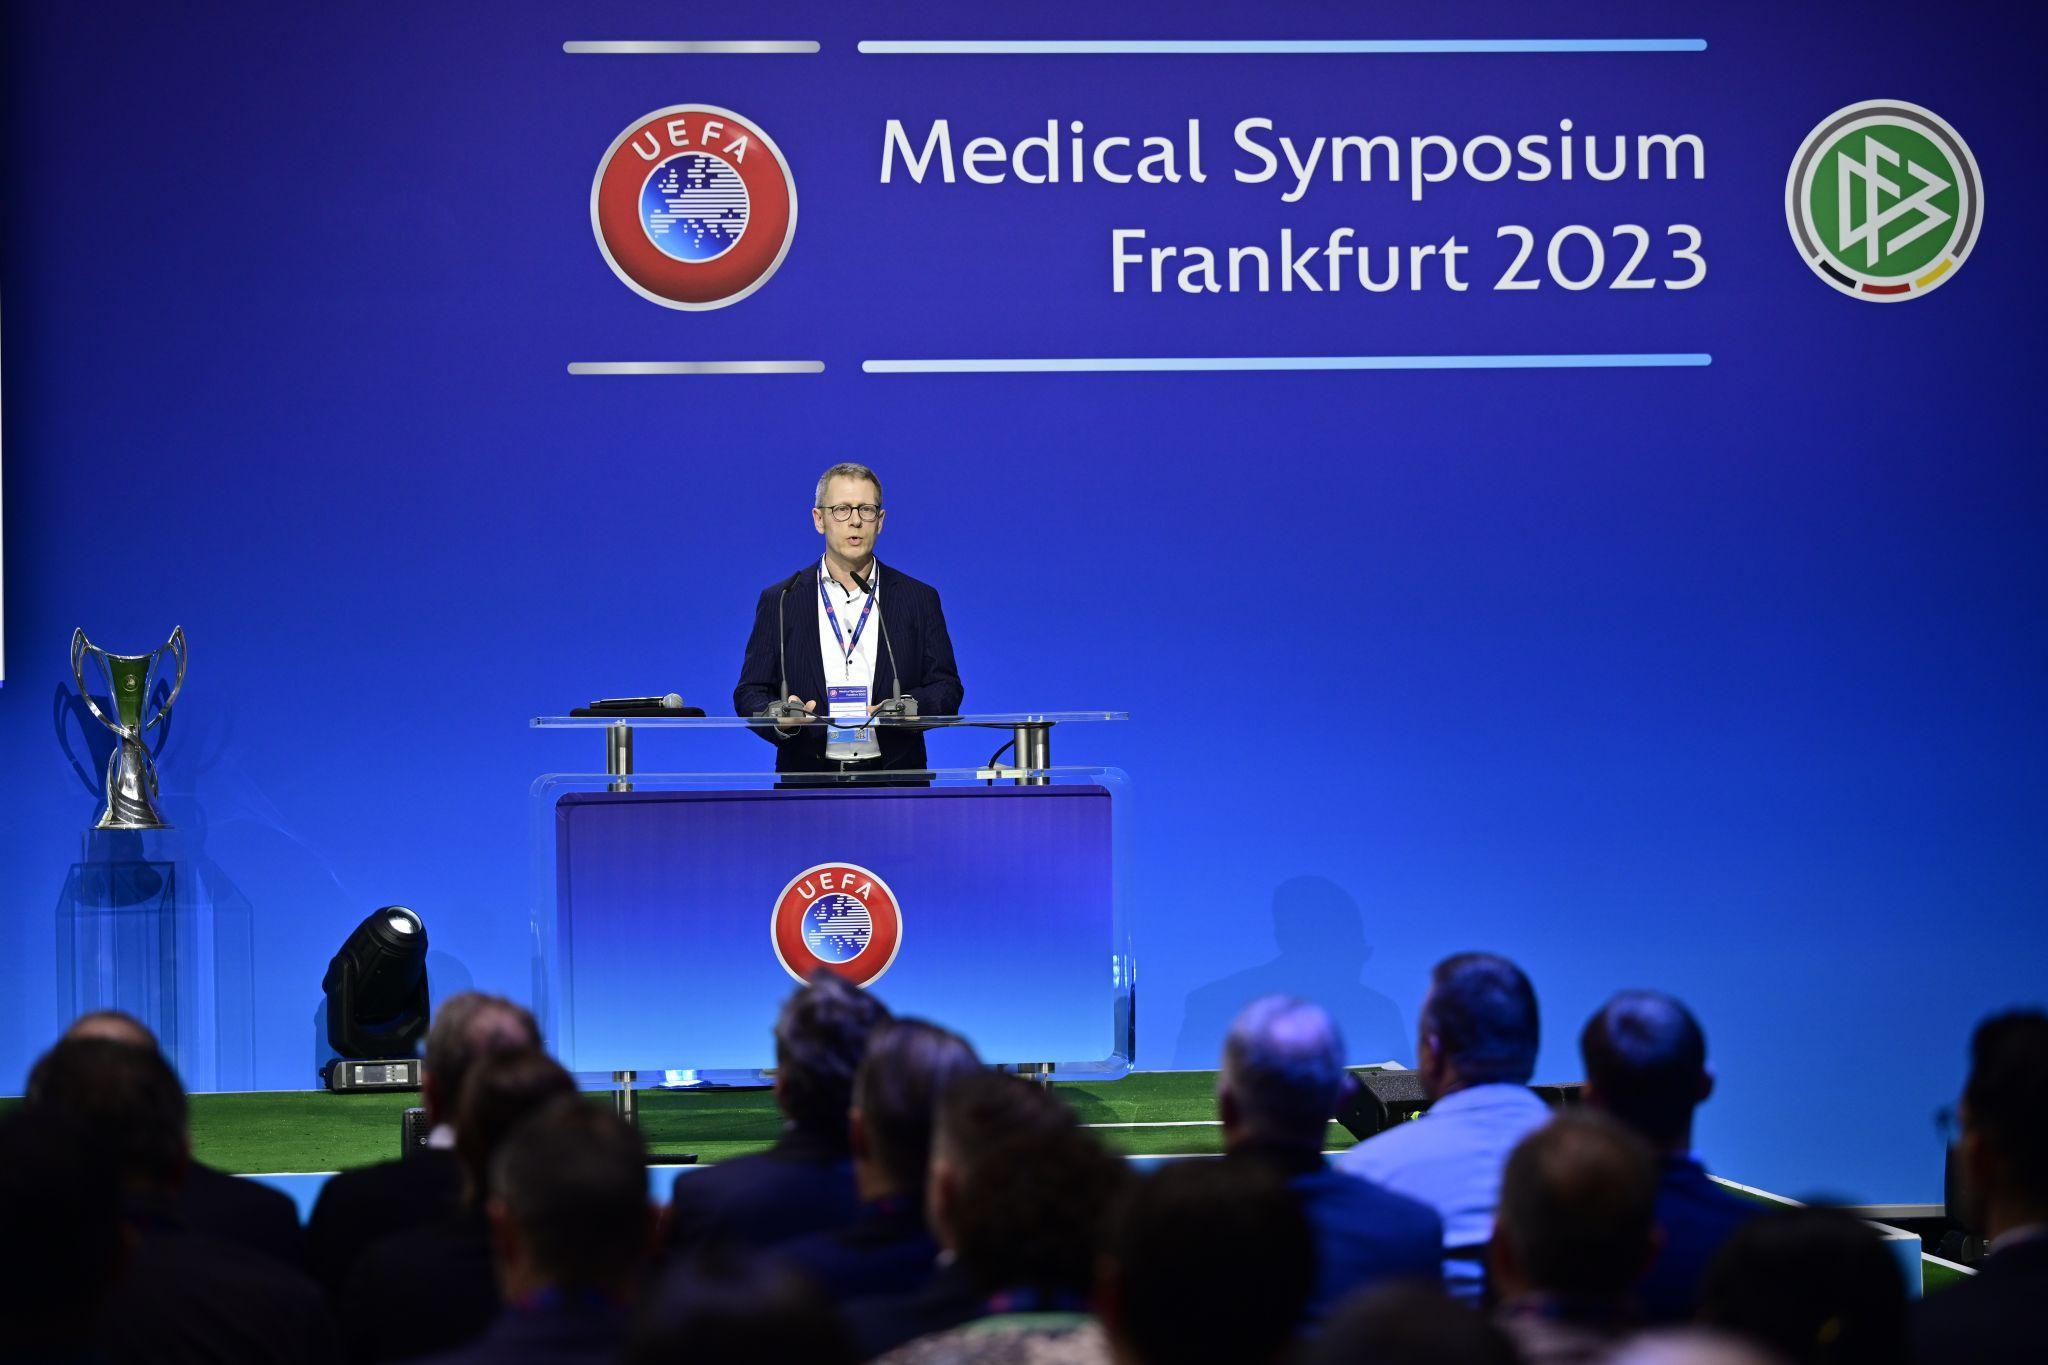 ERC Chair Prof. Dr. Koen Monsieurs at the 8th UEFA Medical Symposium